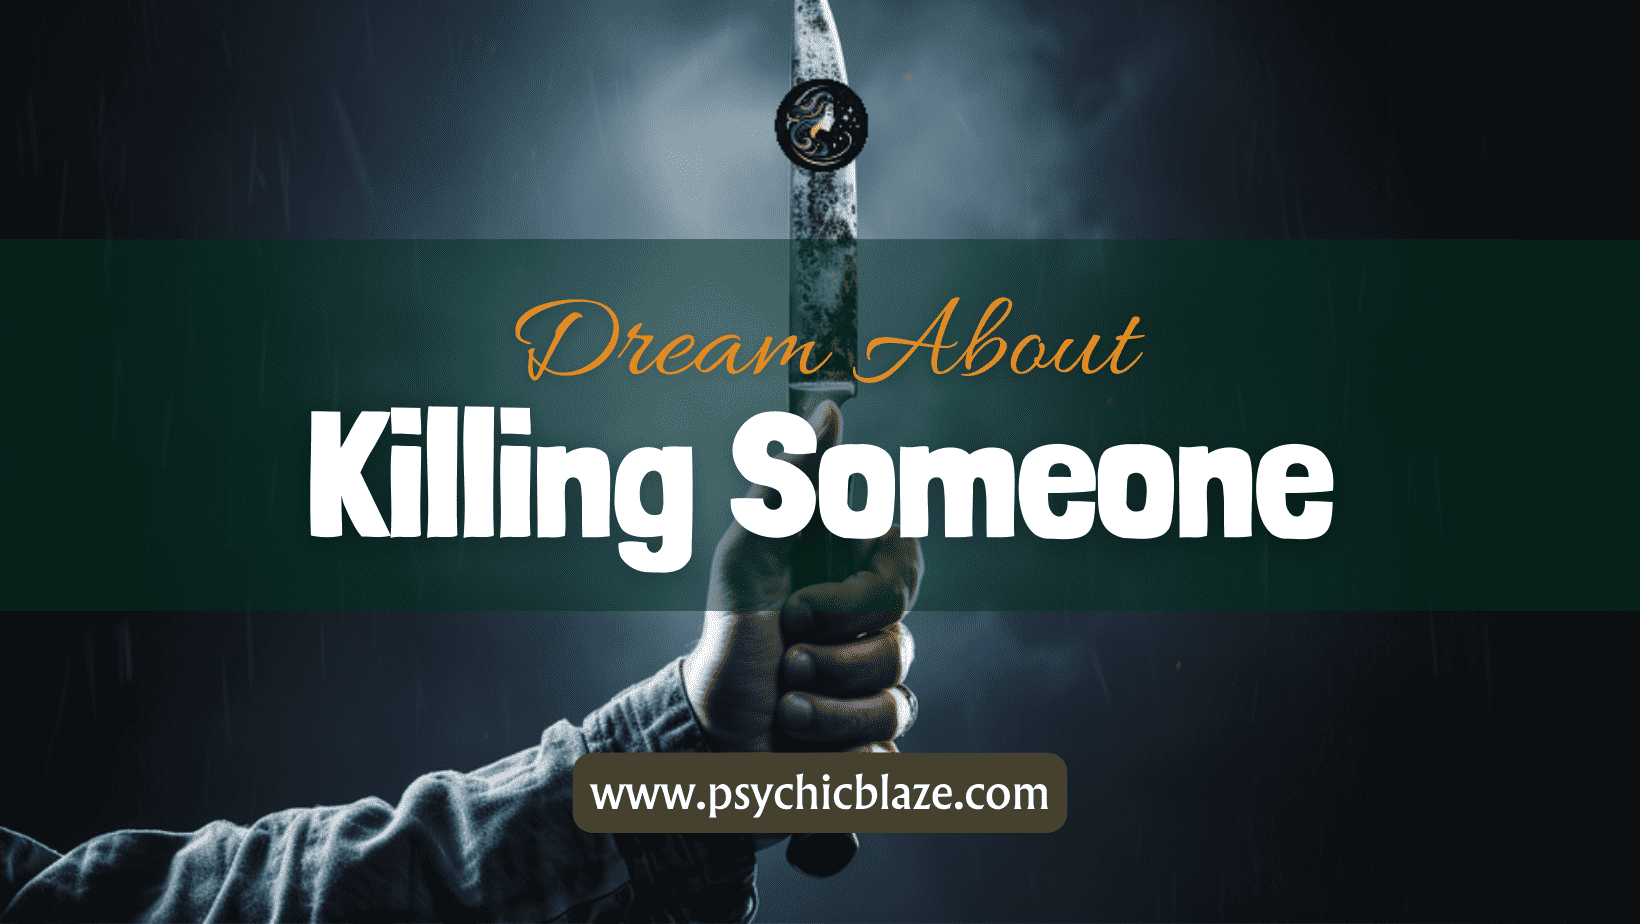 Dream about Killing Someone